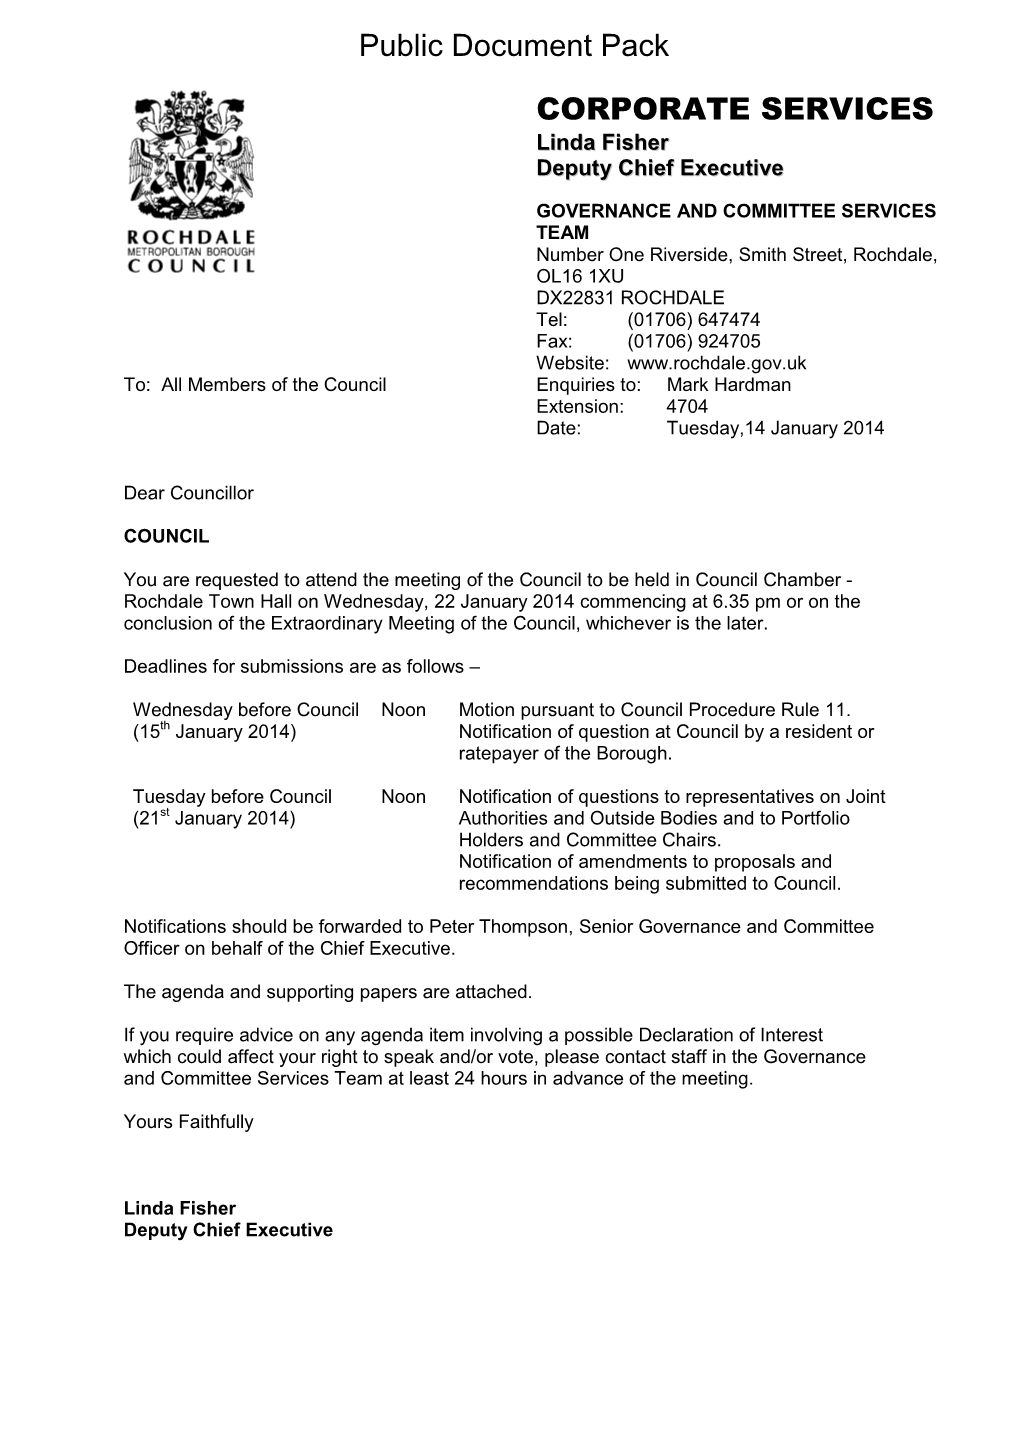 (Public Pack)Agenda Document for Council, 22/01/2014 18:35